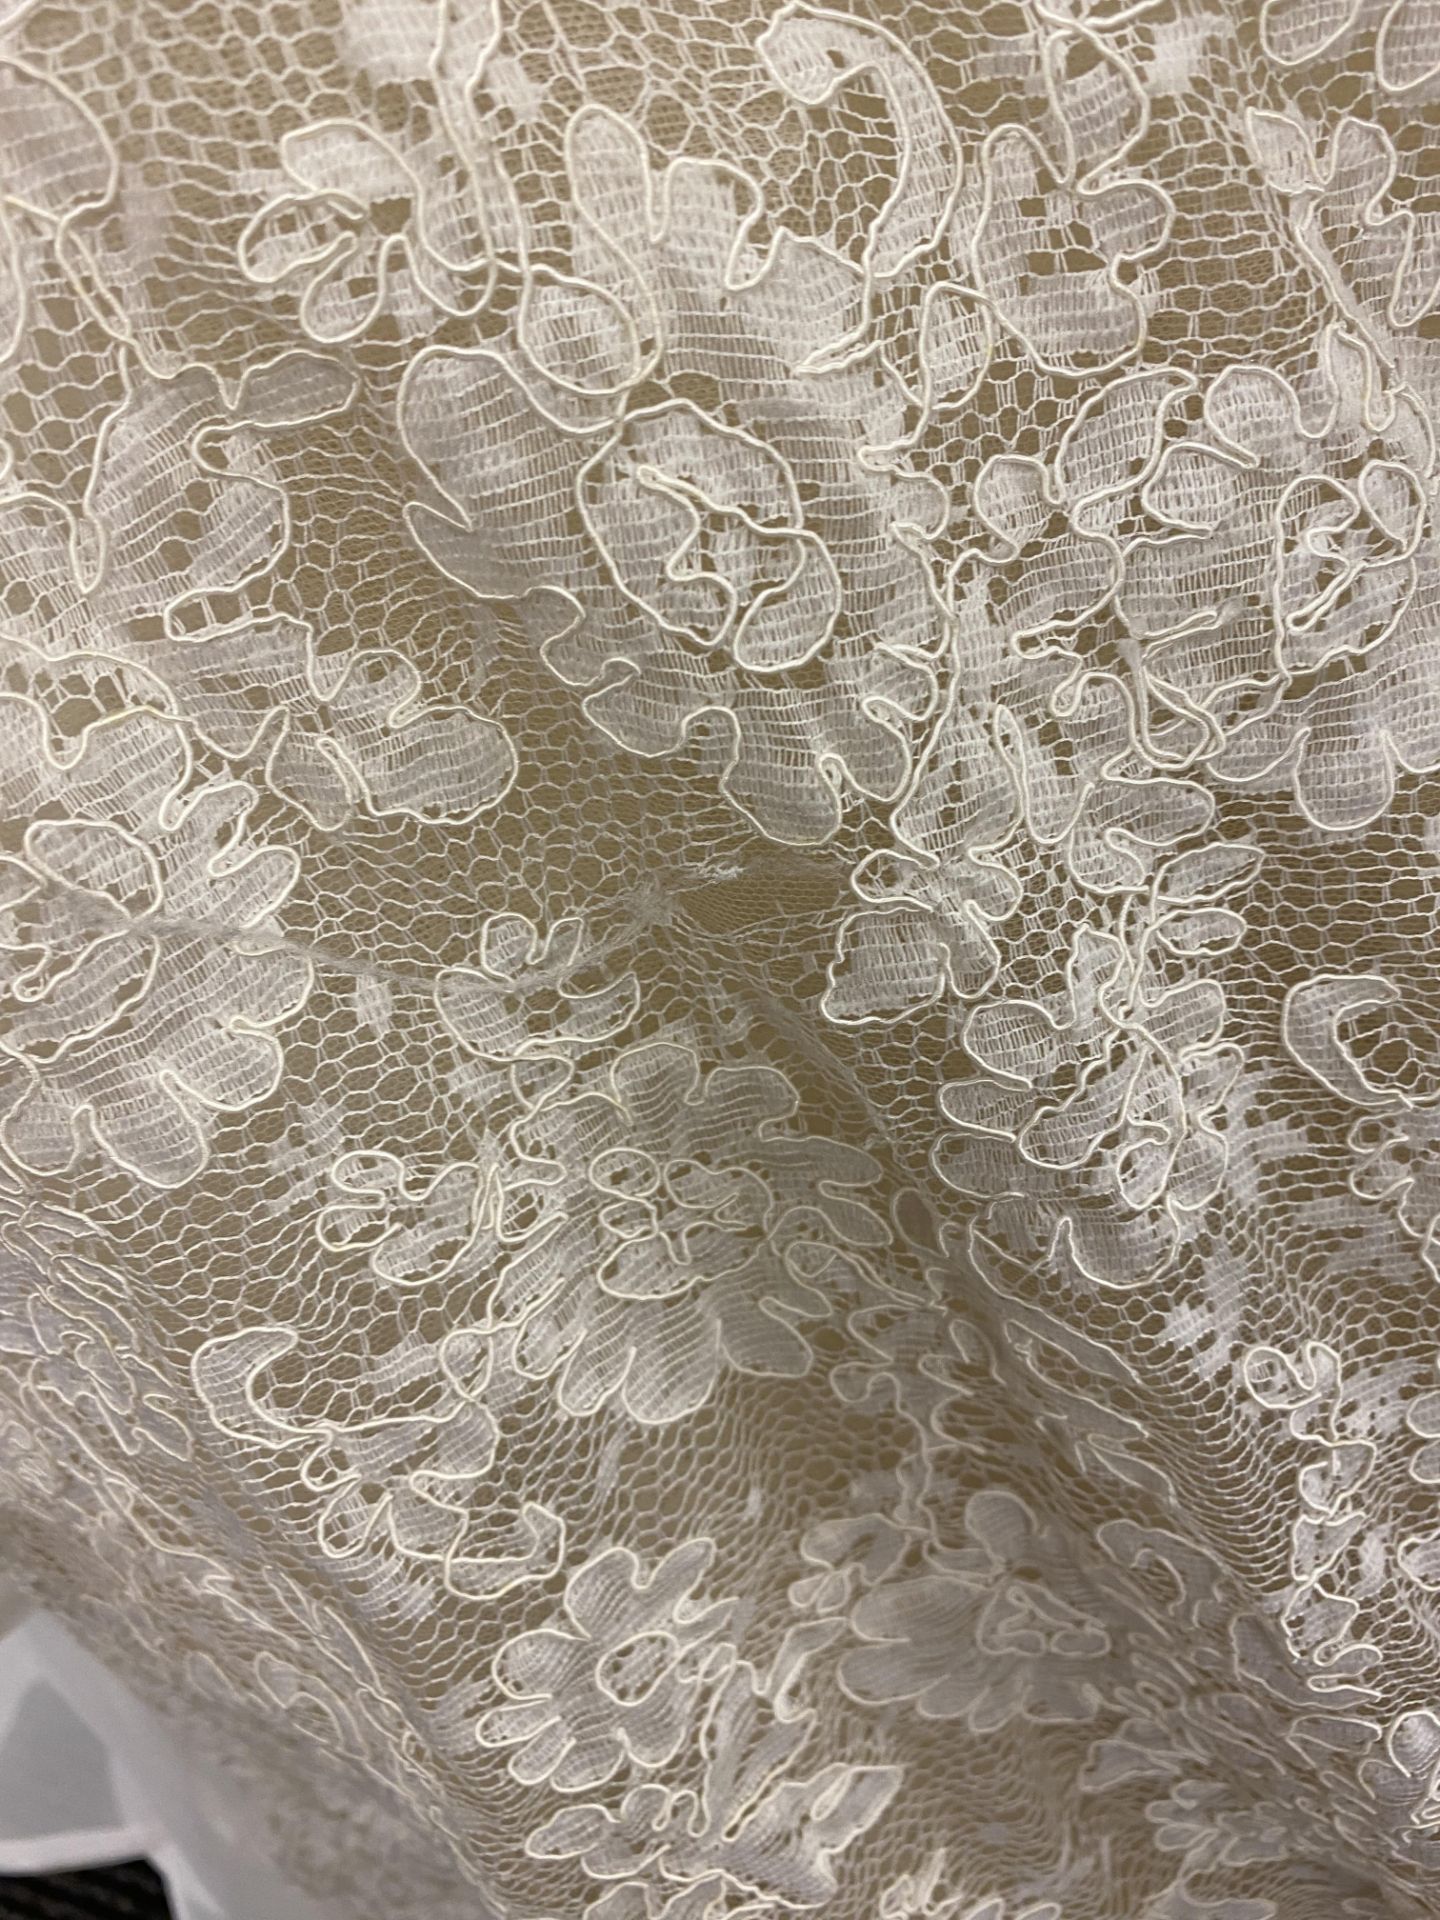 1 x ANNA SUL Y 'White Rose' Full Lace Mermaid Style Designer Wedding Dress RRP £1,250 - Image 9 of 11